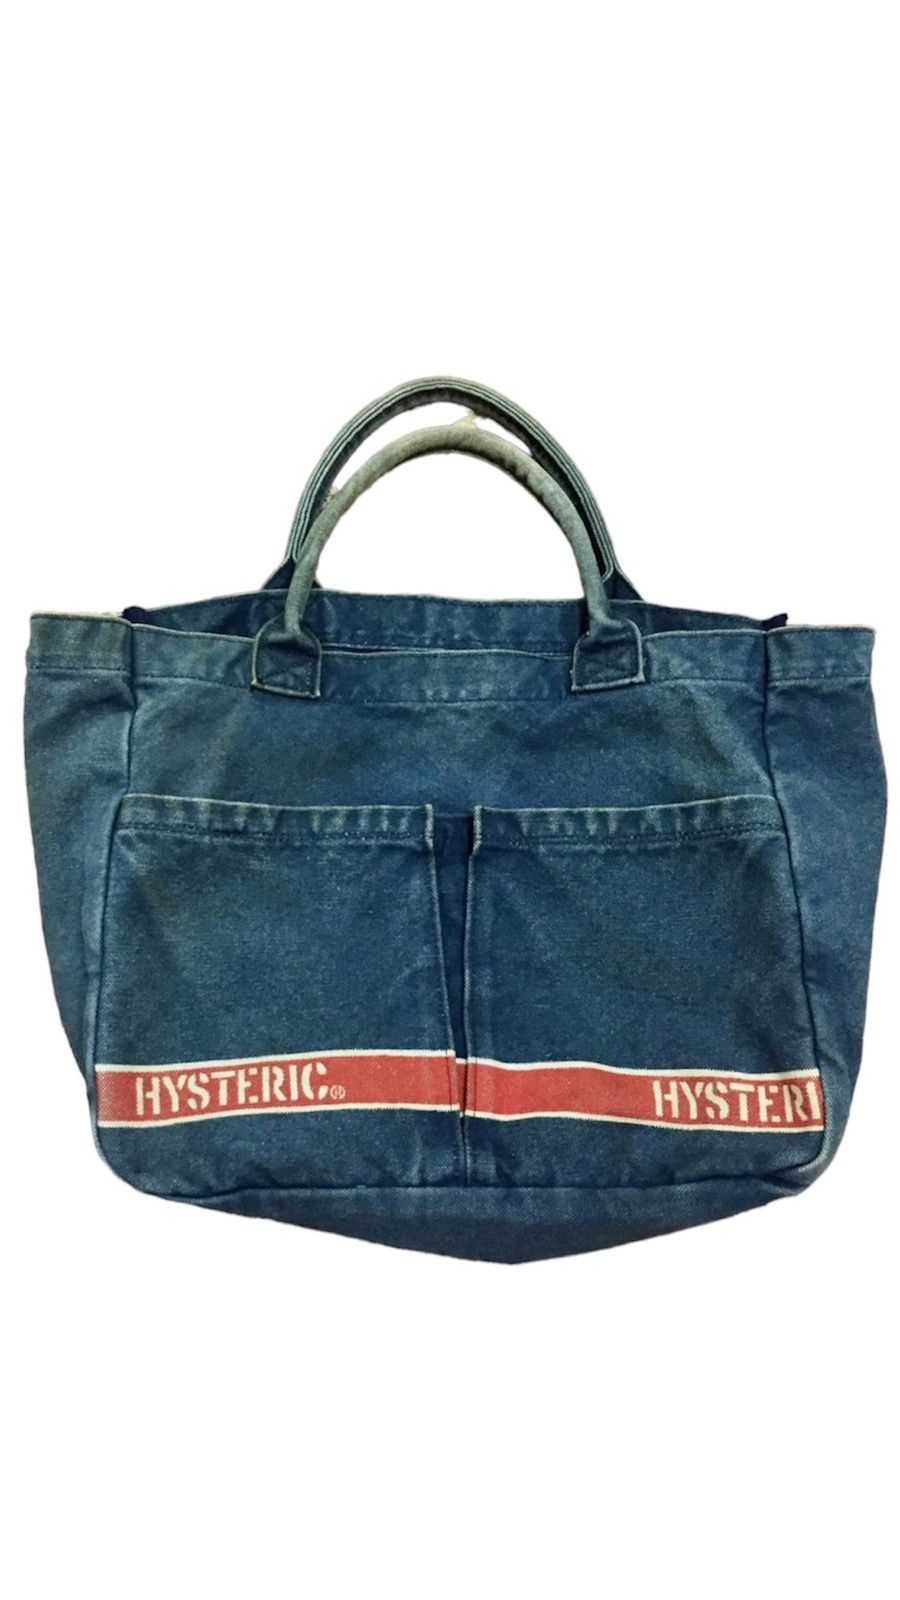 Hysteric Glamour Denim Tote Bag - 1